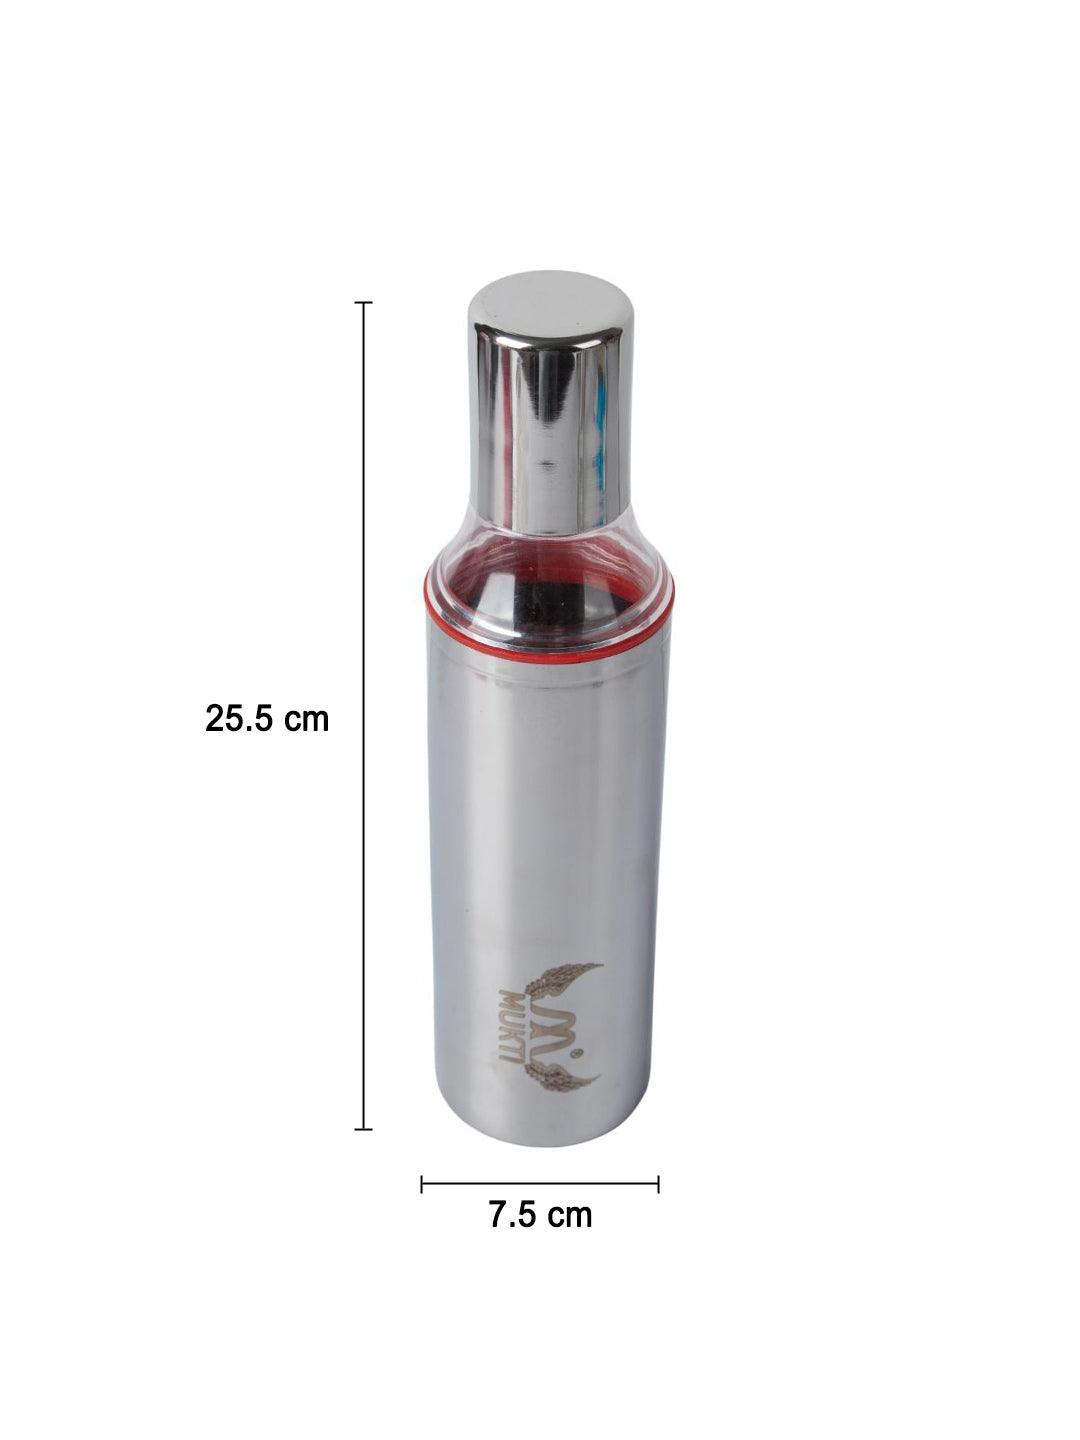 Stainless Steel Oil Pourer/Dispenser With Screw Caps - 750 mL - MARKET 99